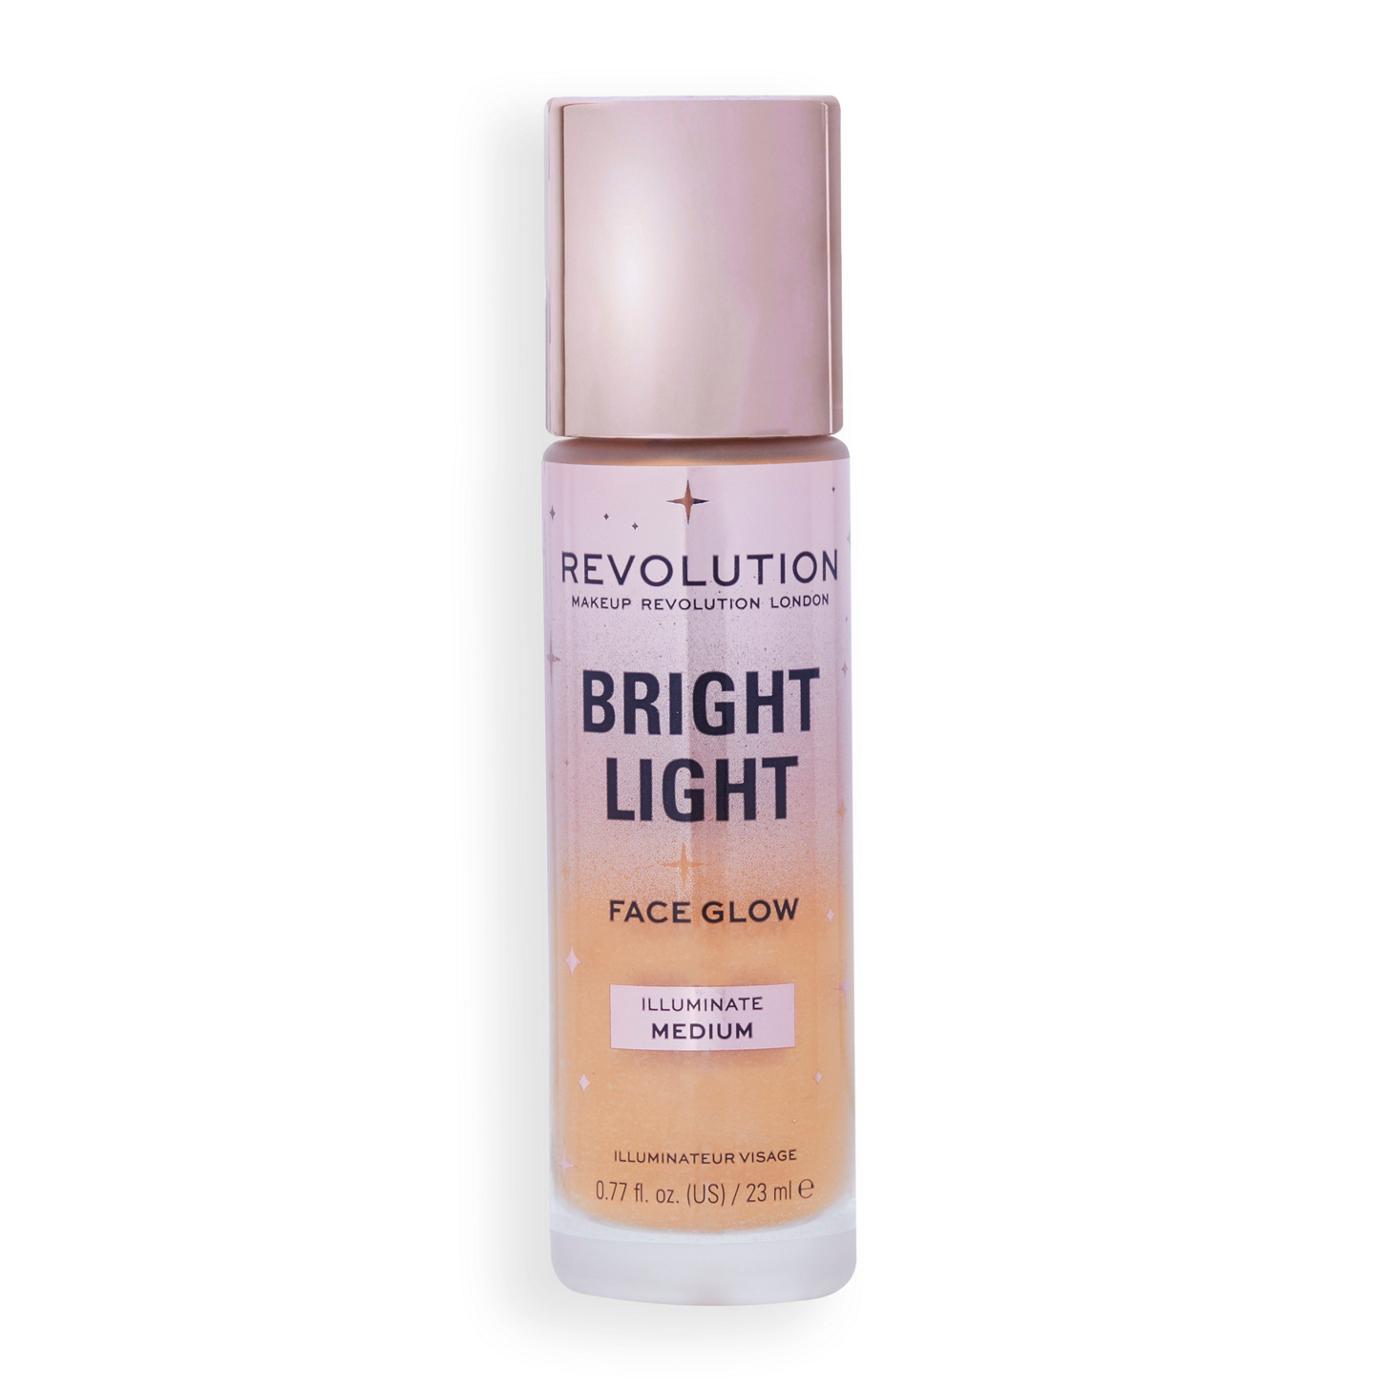 Makeup Revolution Bright Light Face Glow - Illuminate Medium; image 1 of 3